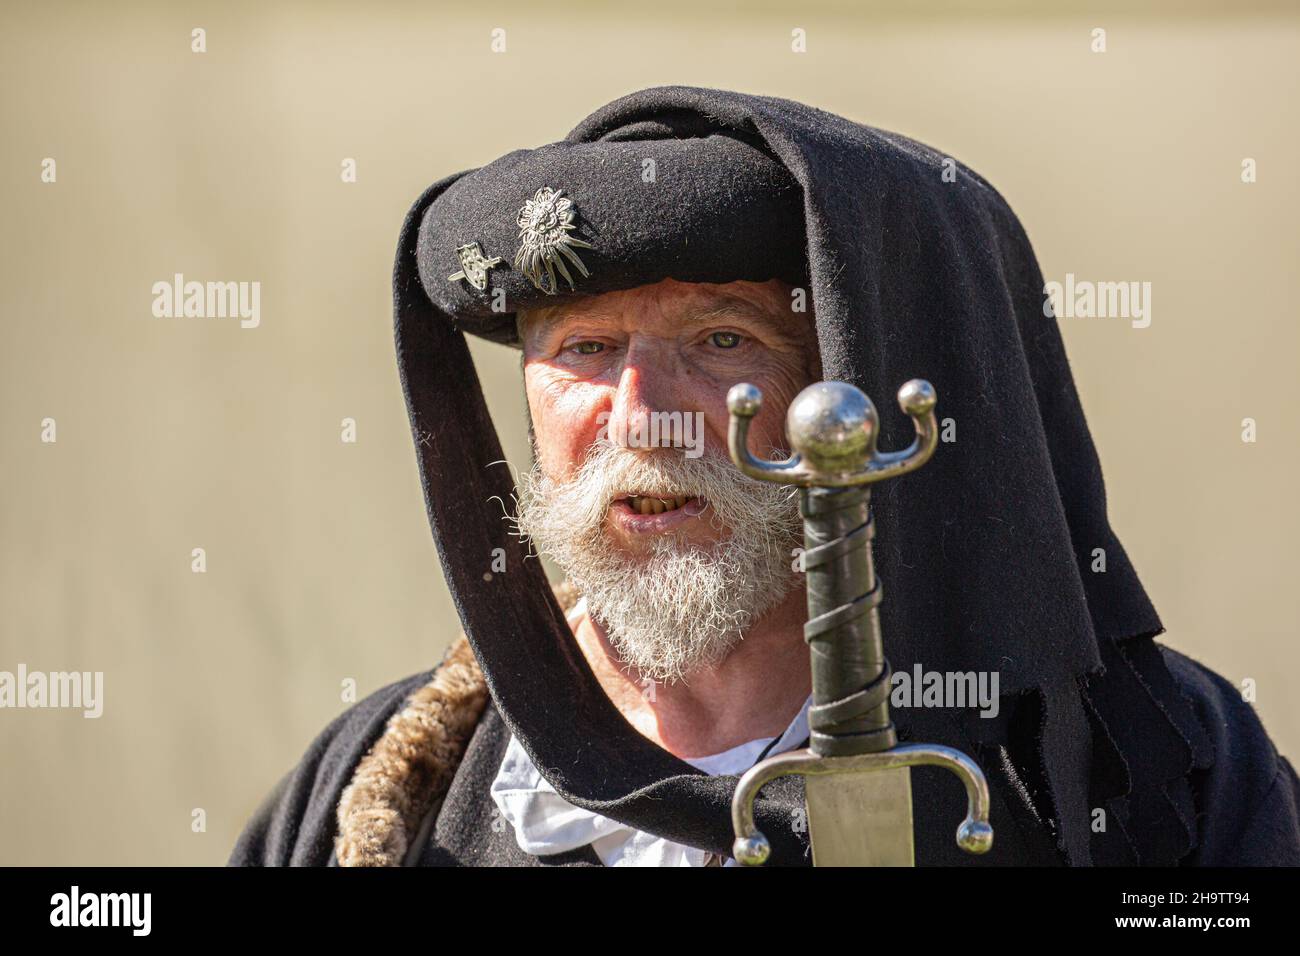 Old man with grey beard holding sword Stock Photo